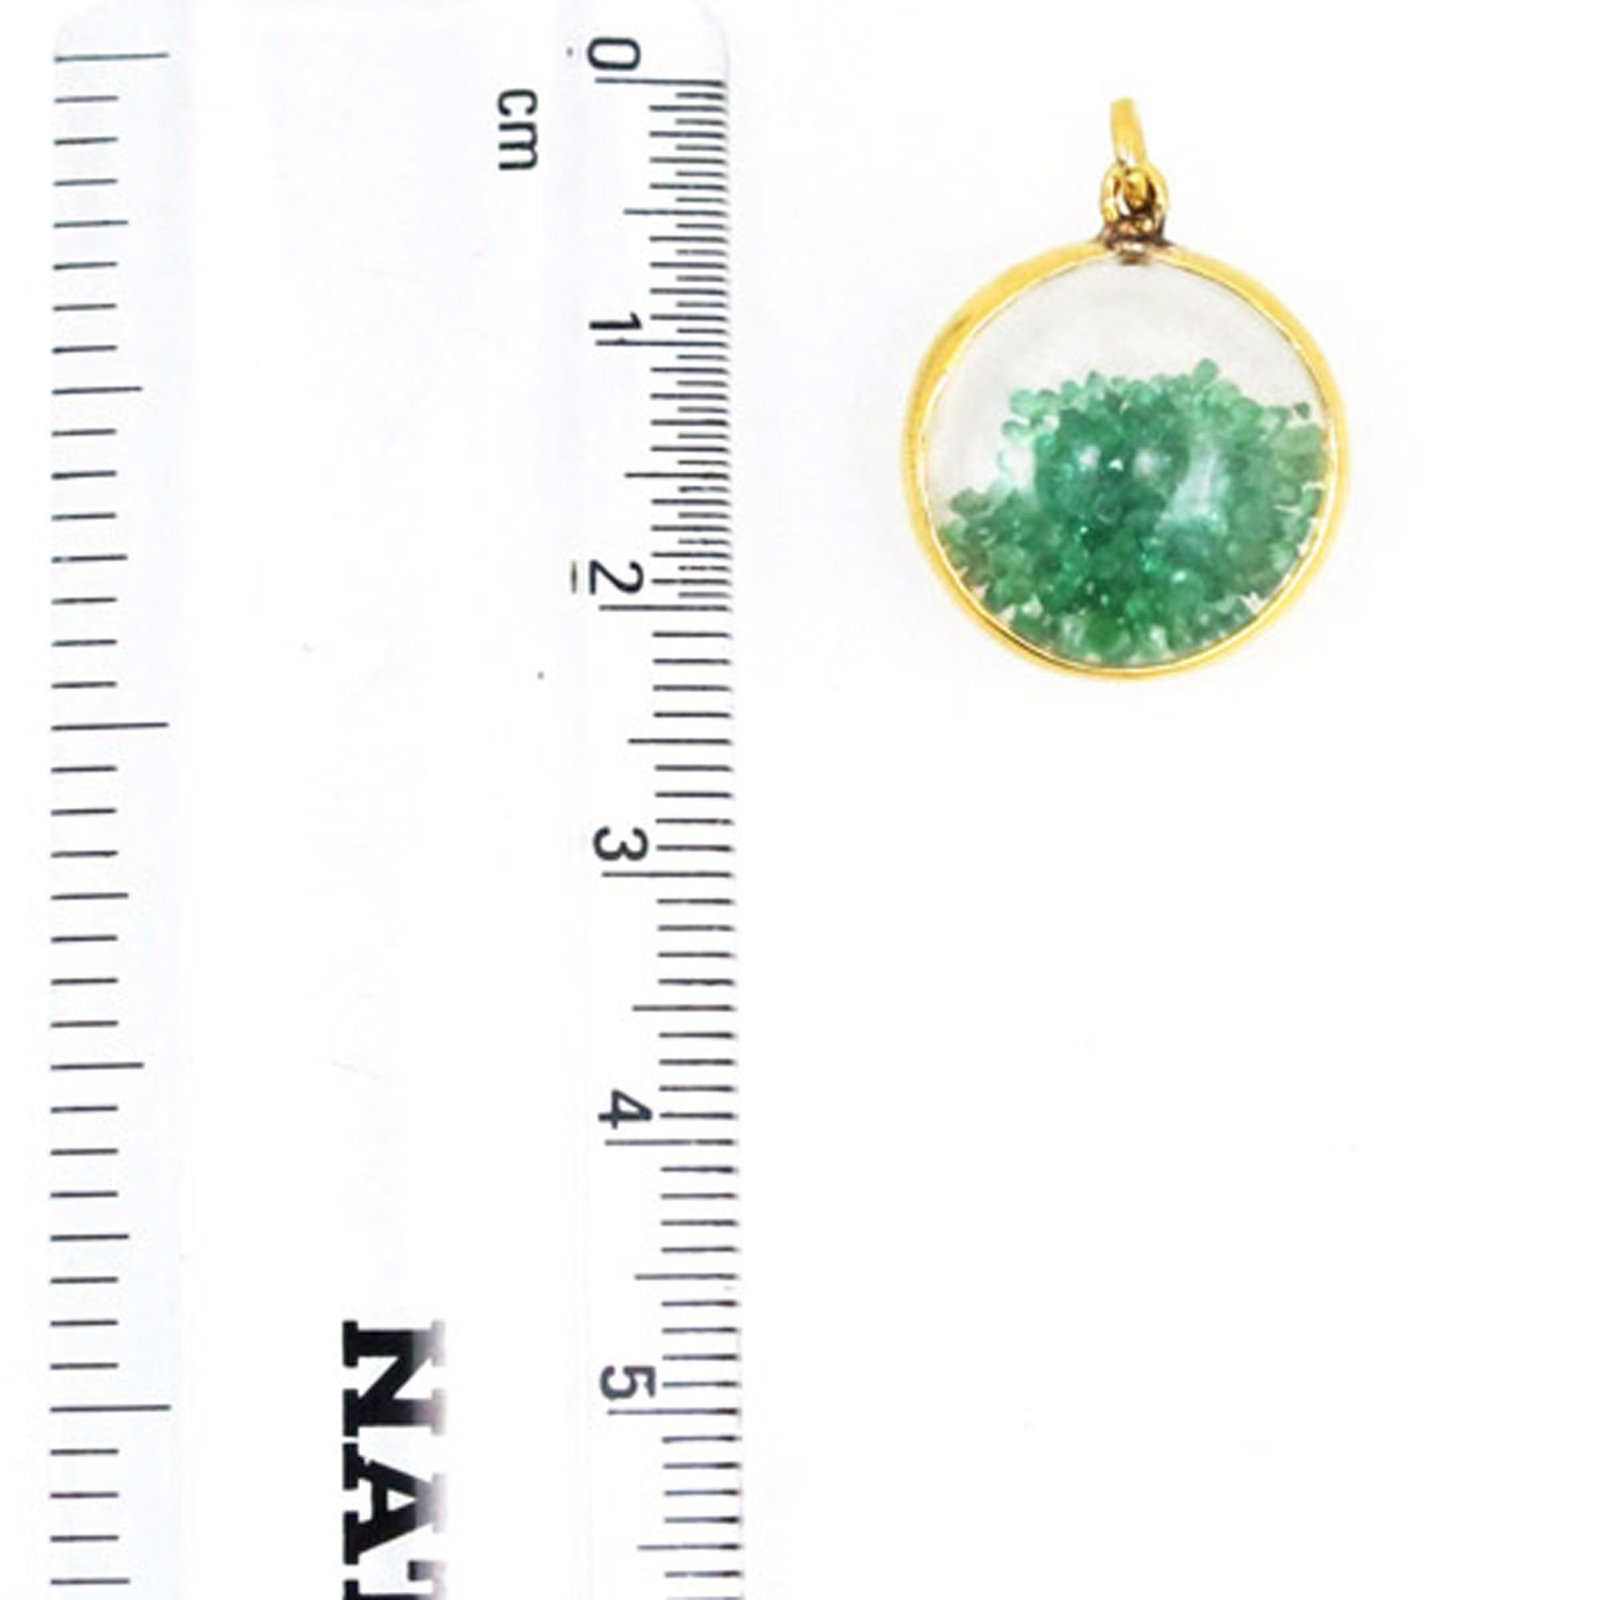 14k solid gold crystal quartz shaker pendant with emerald